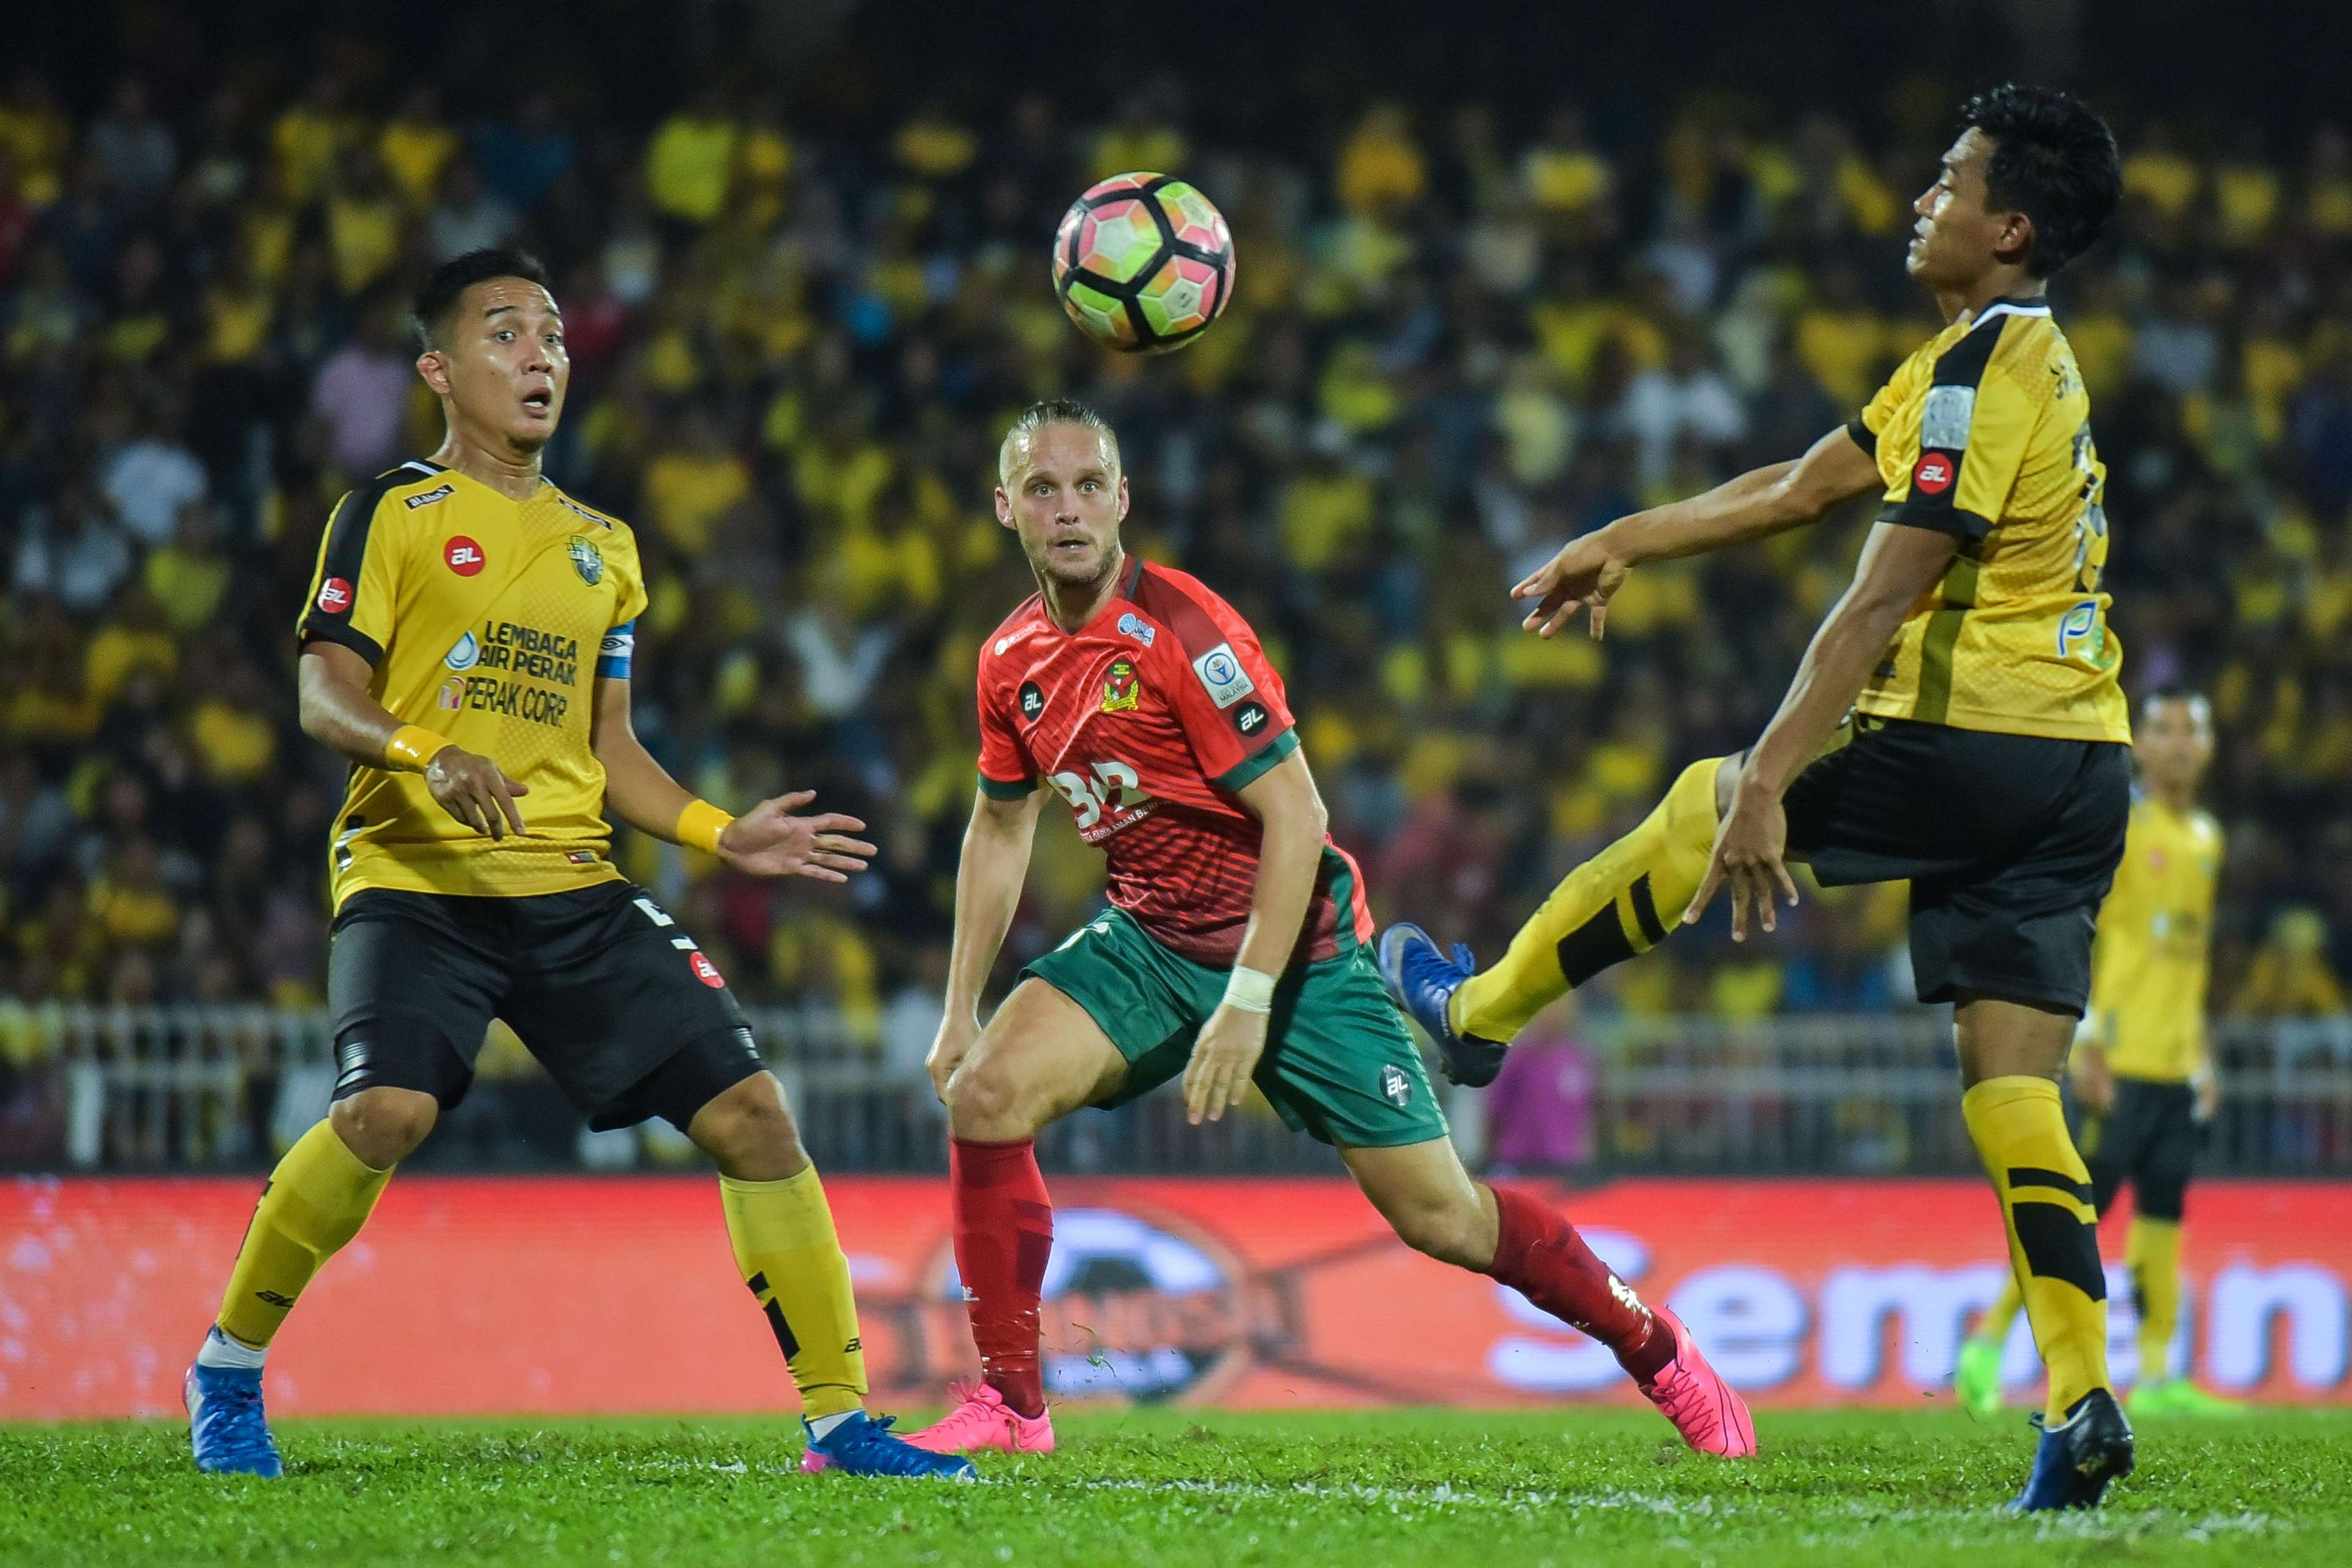 Shahrom Kalam Perak Ken Ilso Larsen Kedah Malaysia FA Cup 11032017